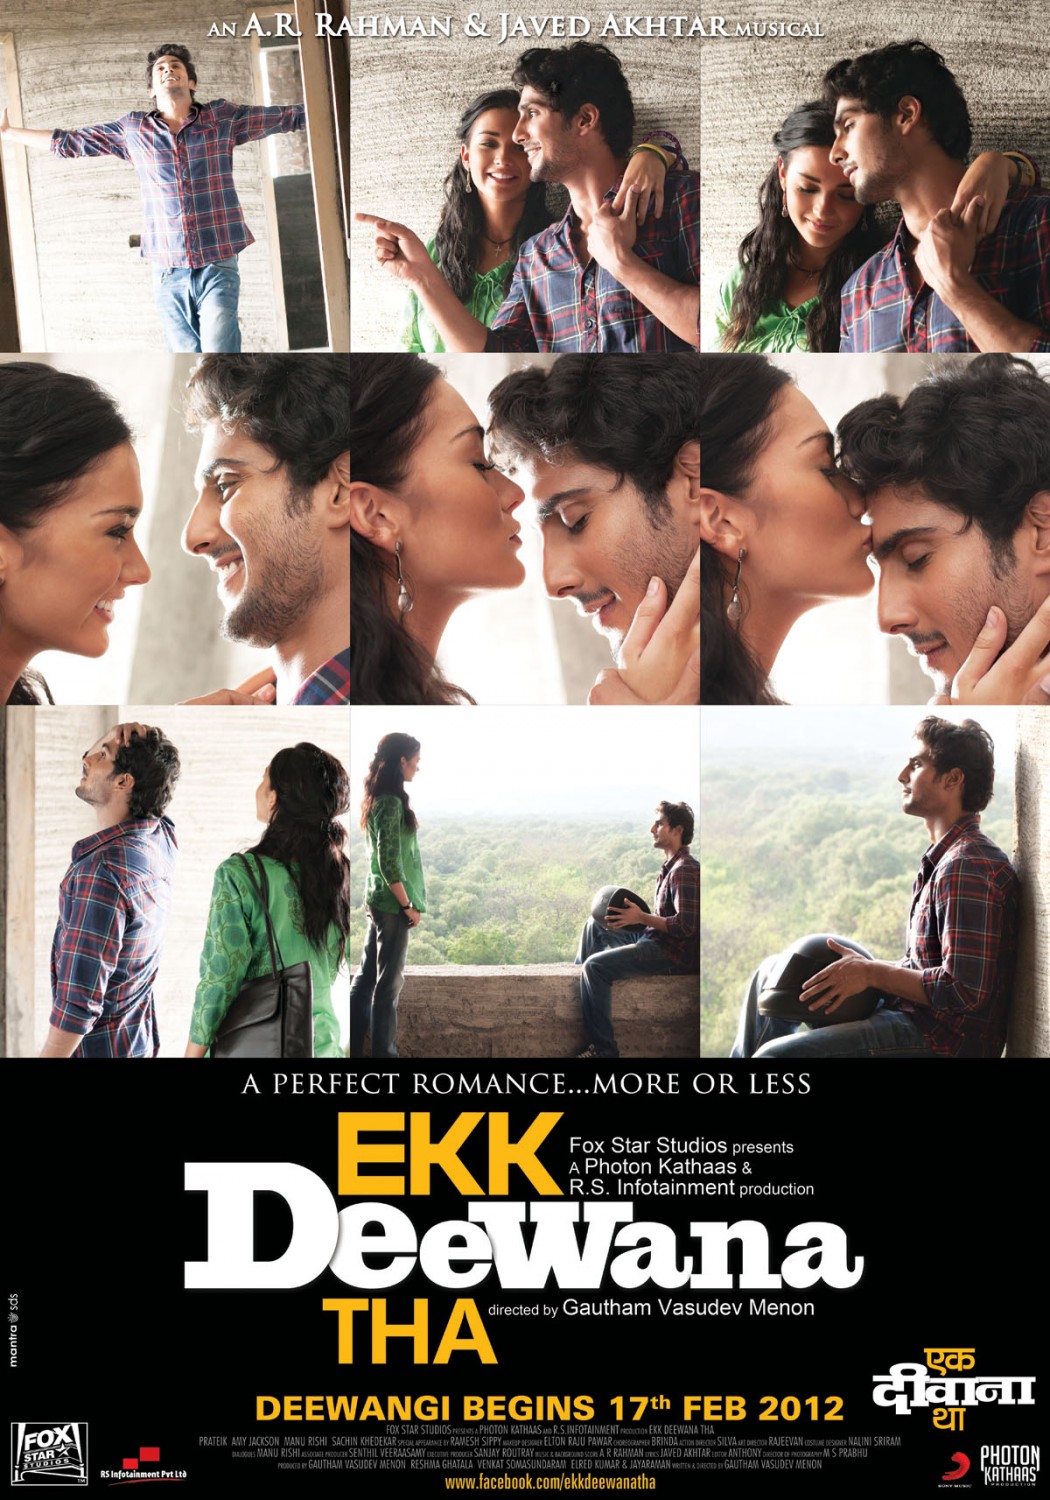 Extra Large Movie Poster Image for Ekk Deewana Tha (#2 of 2)